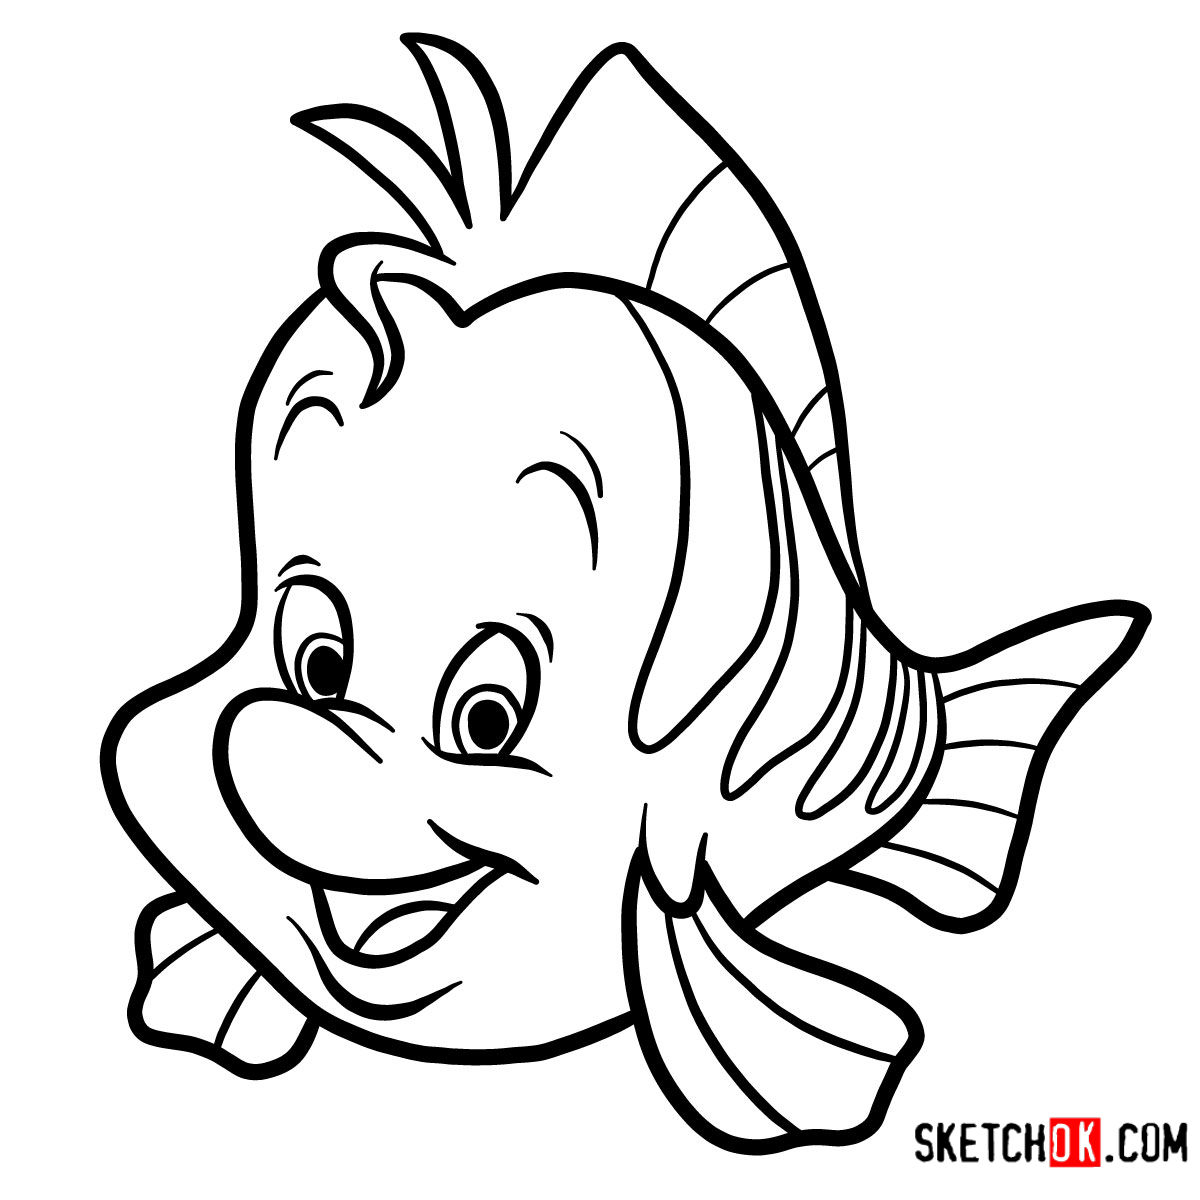 Flounder flatfish fish sketch vector. Flounder flatfish plaice fish animal  sketch engraving vector illustration. scratch | CanStock